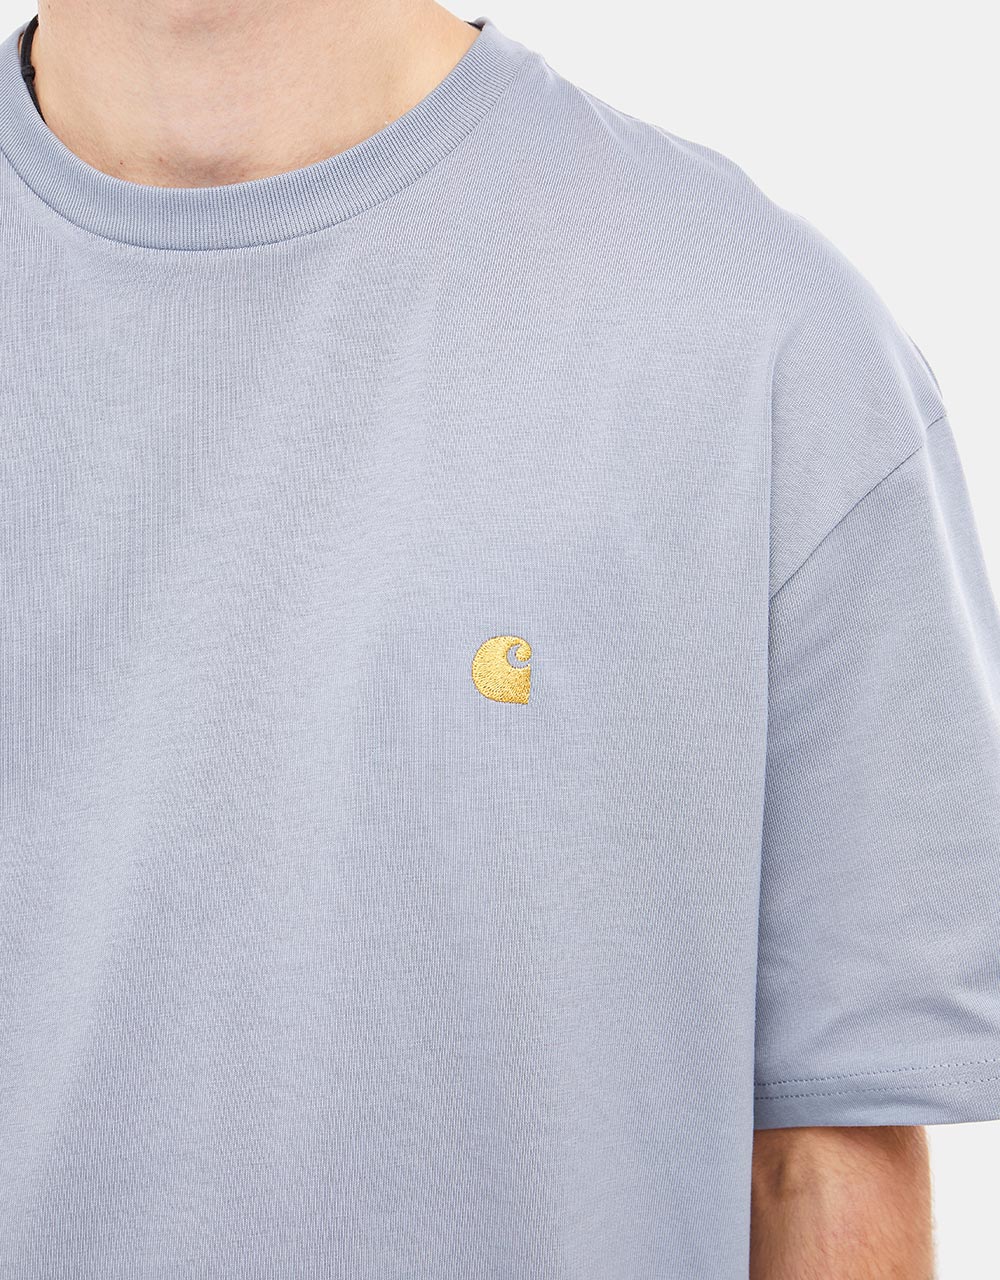 Carhartt WIP Chase T-Shirt - Mirror/Gold